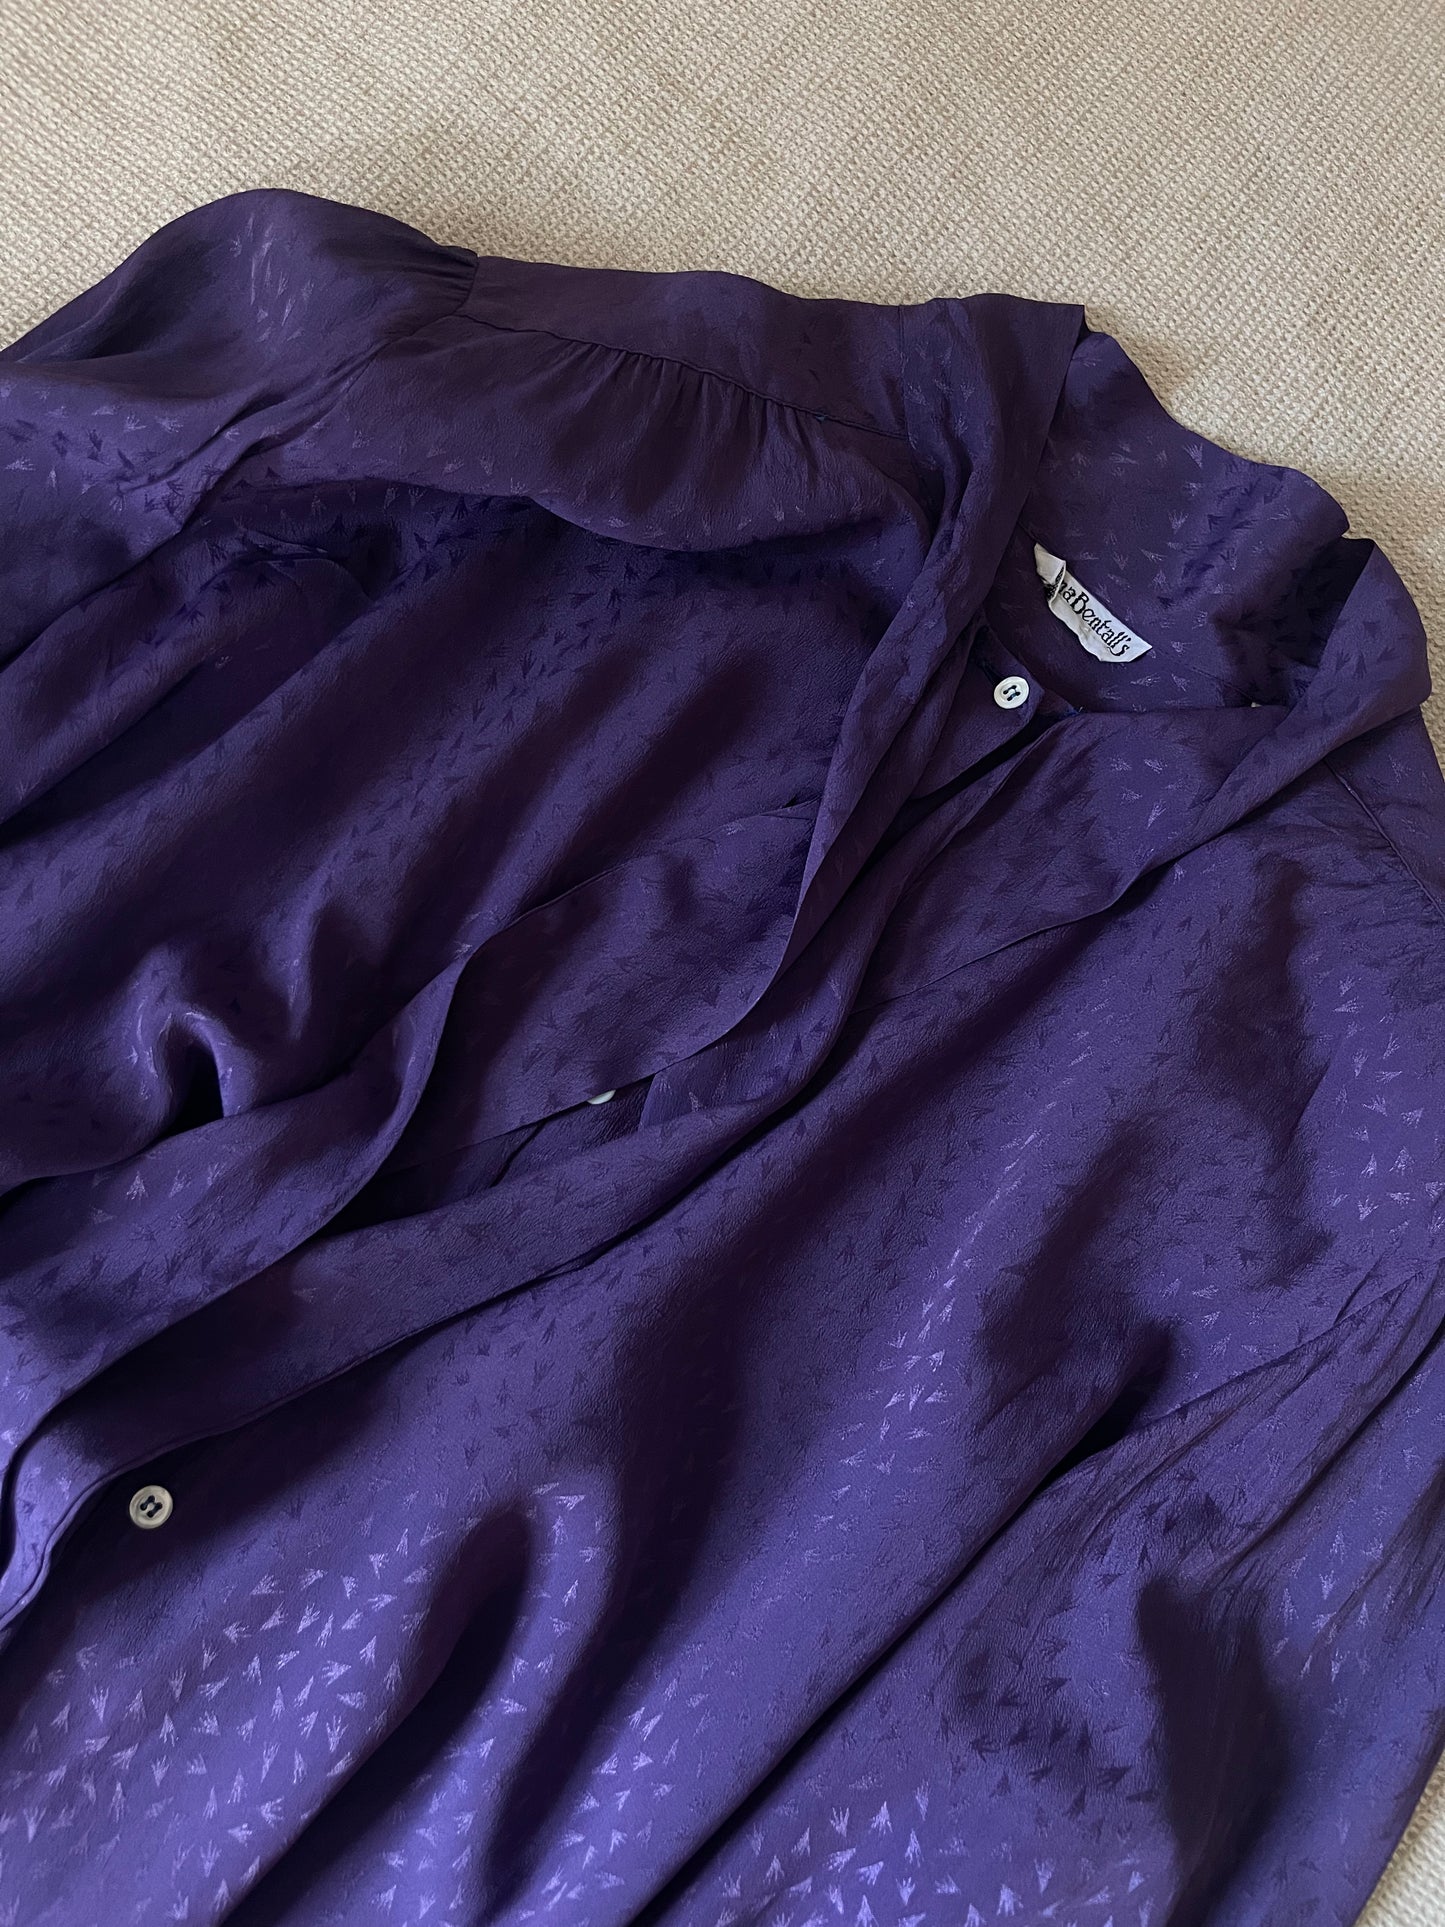 The violet shirt